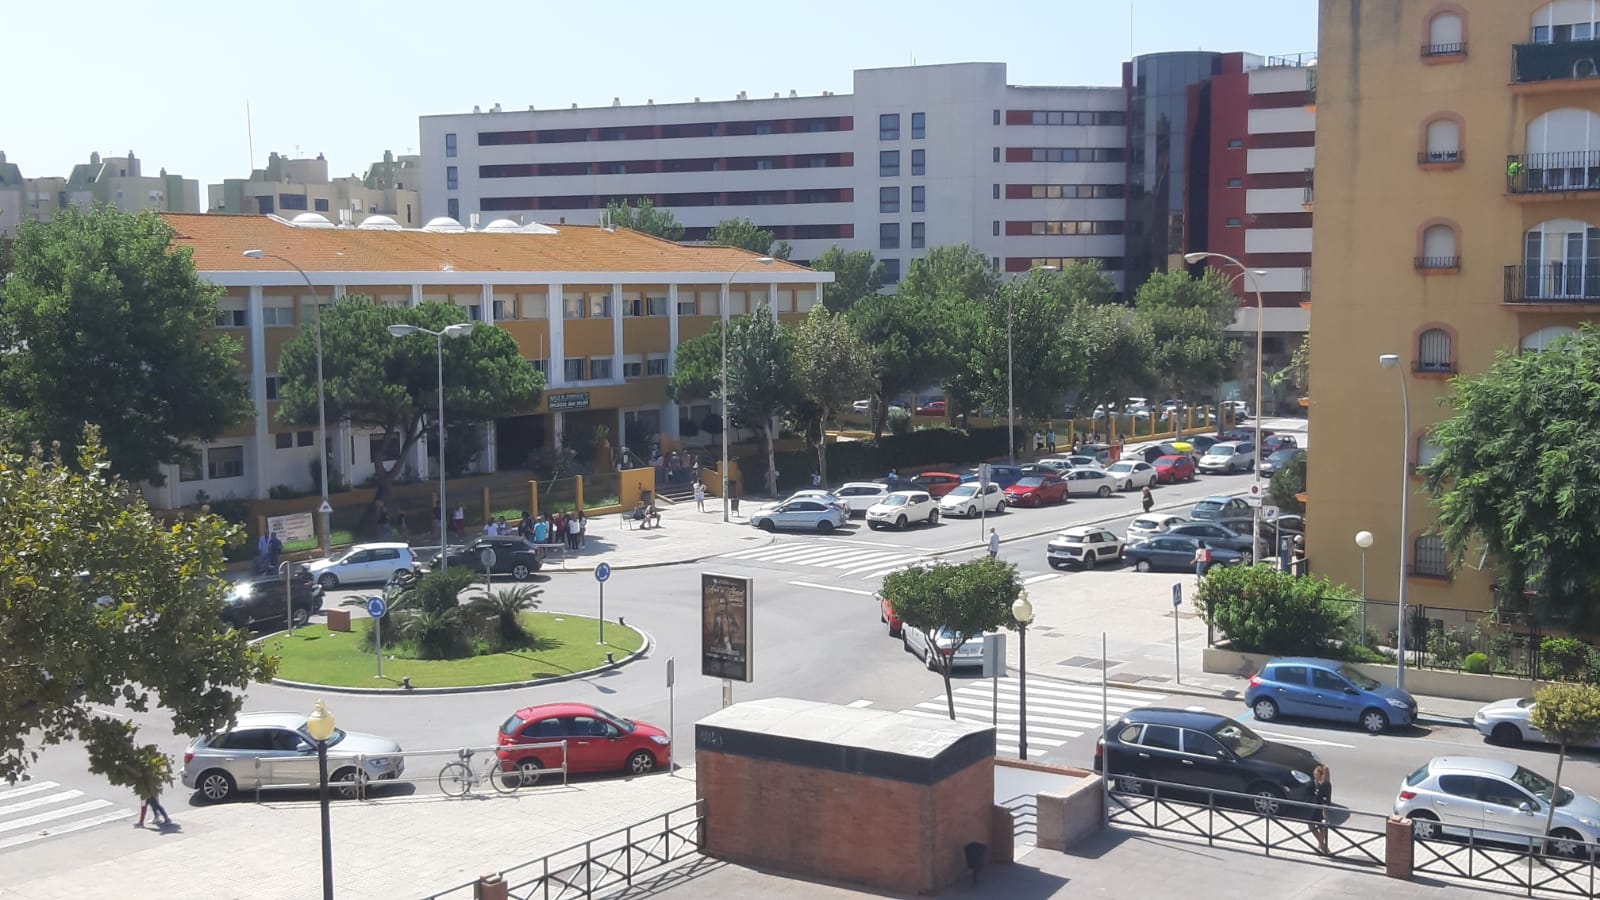 Colegio San Felipe y Rotonda